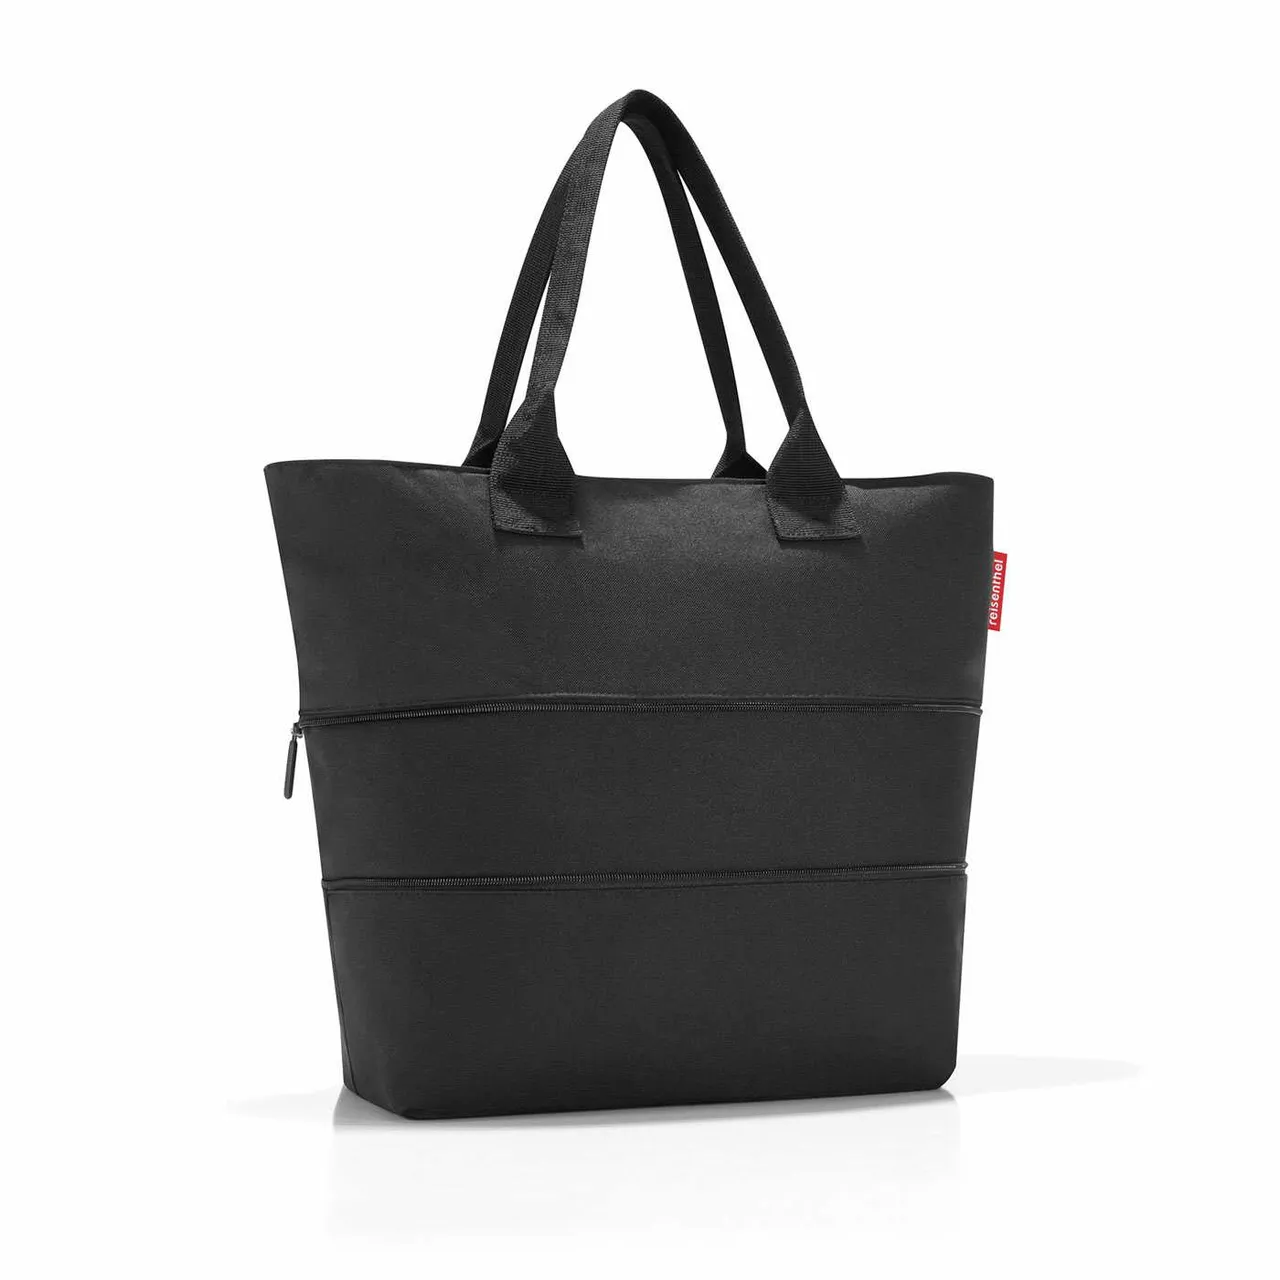 Handtaschen schwarz SHOPPER E1_7003 black -